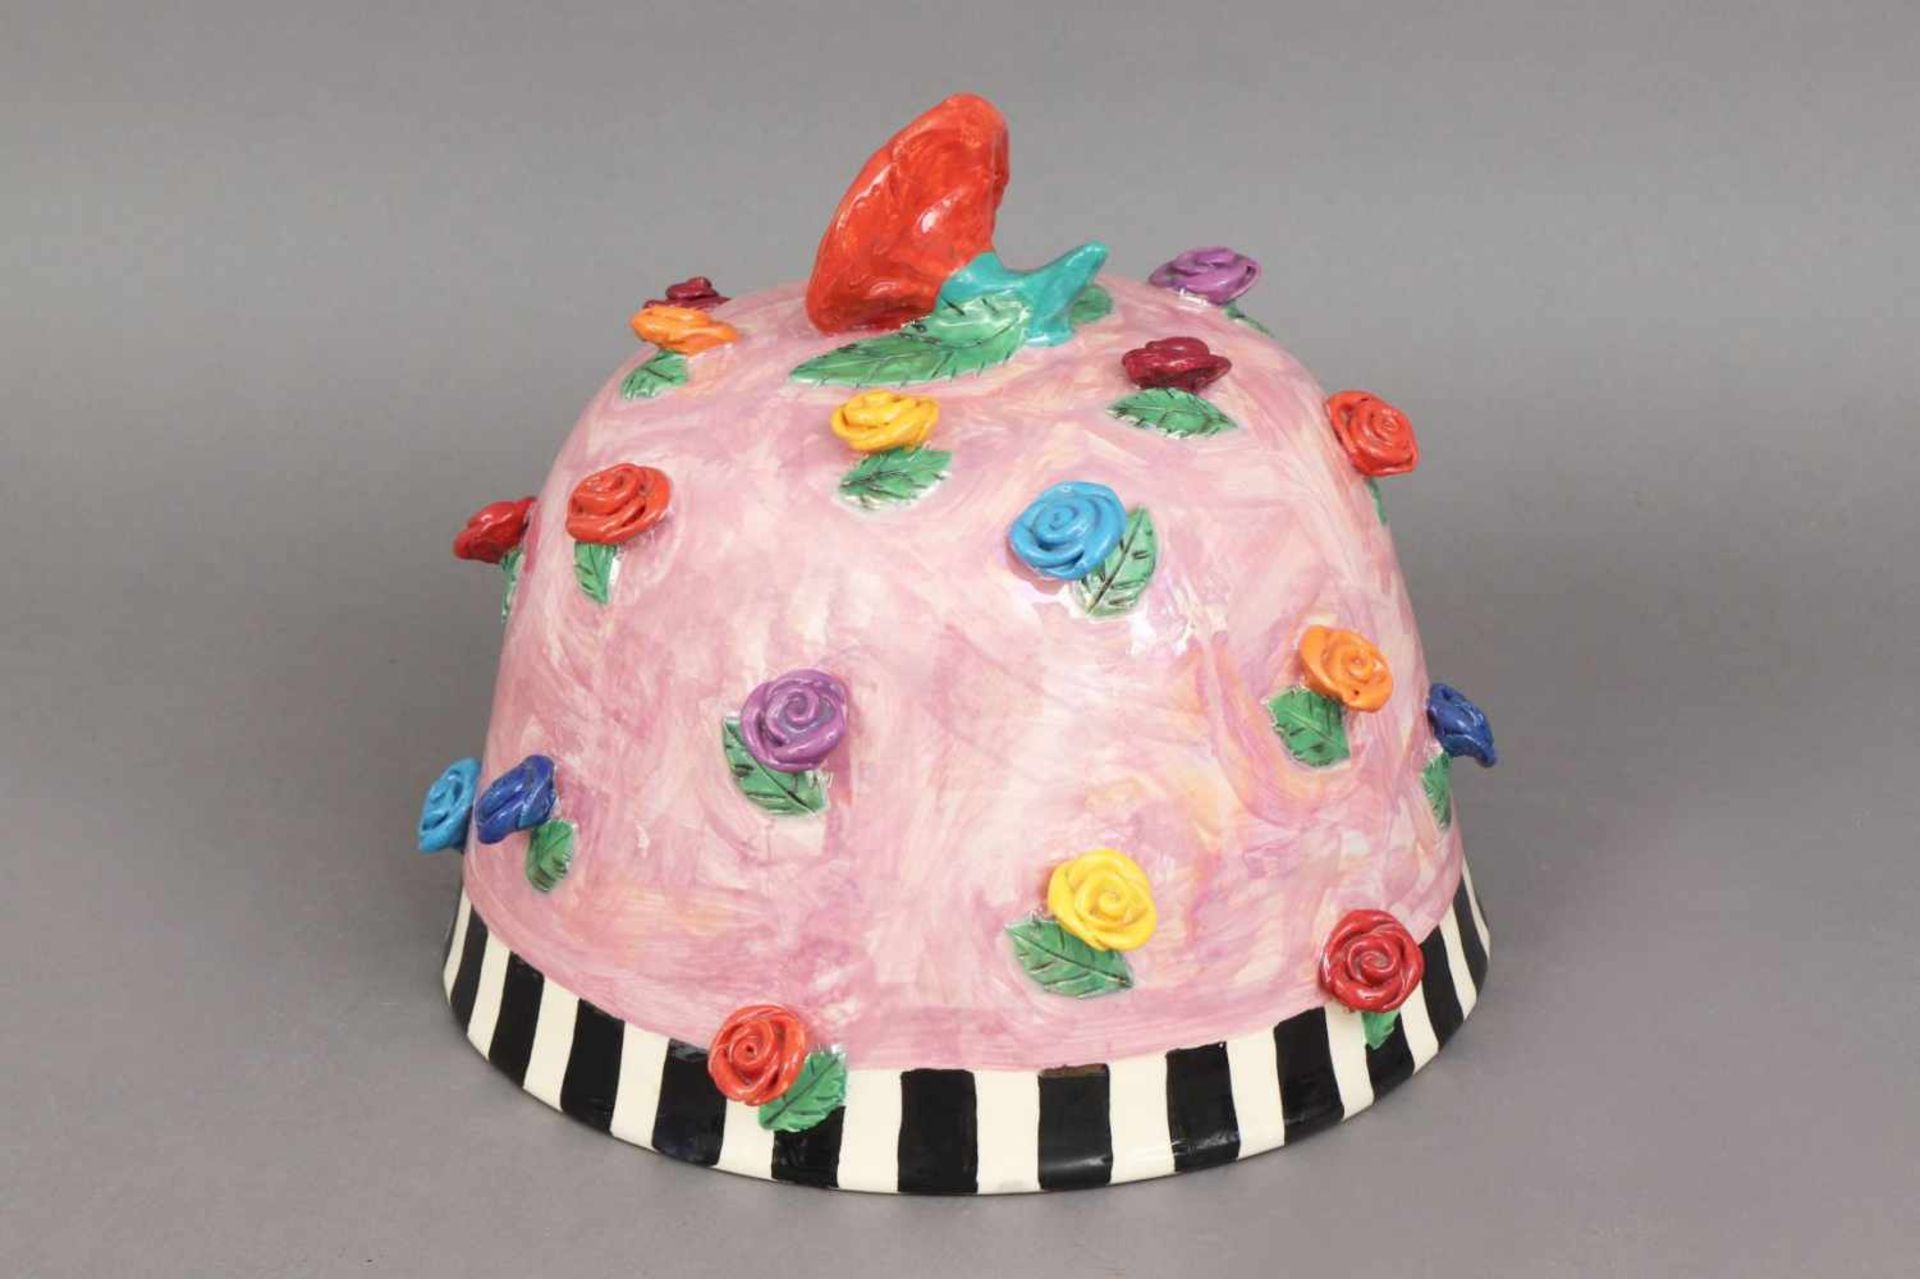 MARY ROSE YOUNG (1958) ¨Speiseglocke¨ (Cloche)Keramik, perlmutt-rosa glasierte Kuppel mit - Image 2 of 3